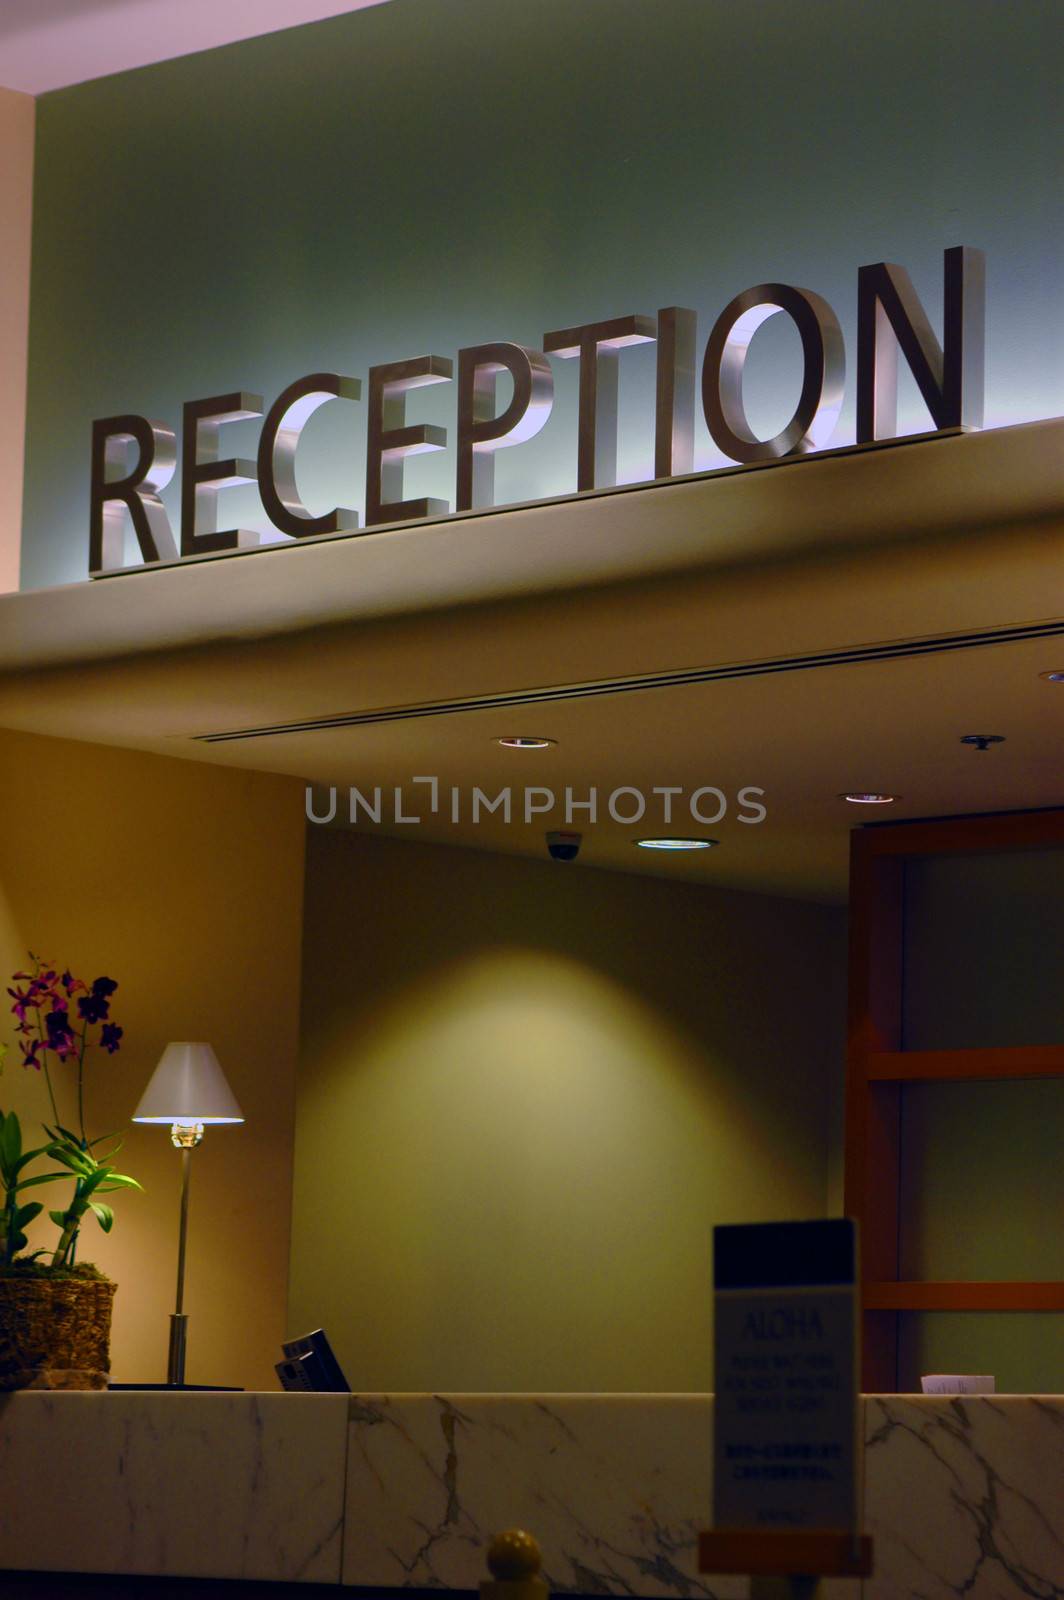 A reception desk at a modern hotel